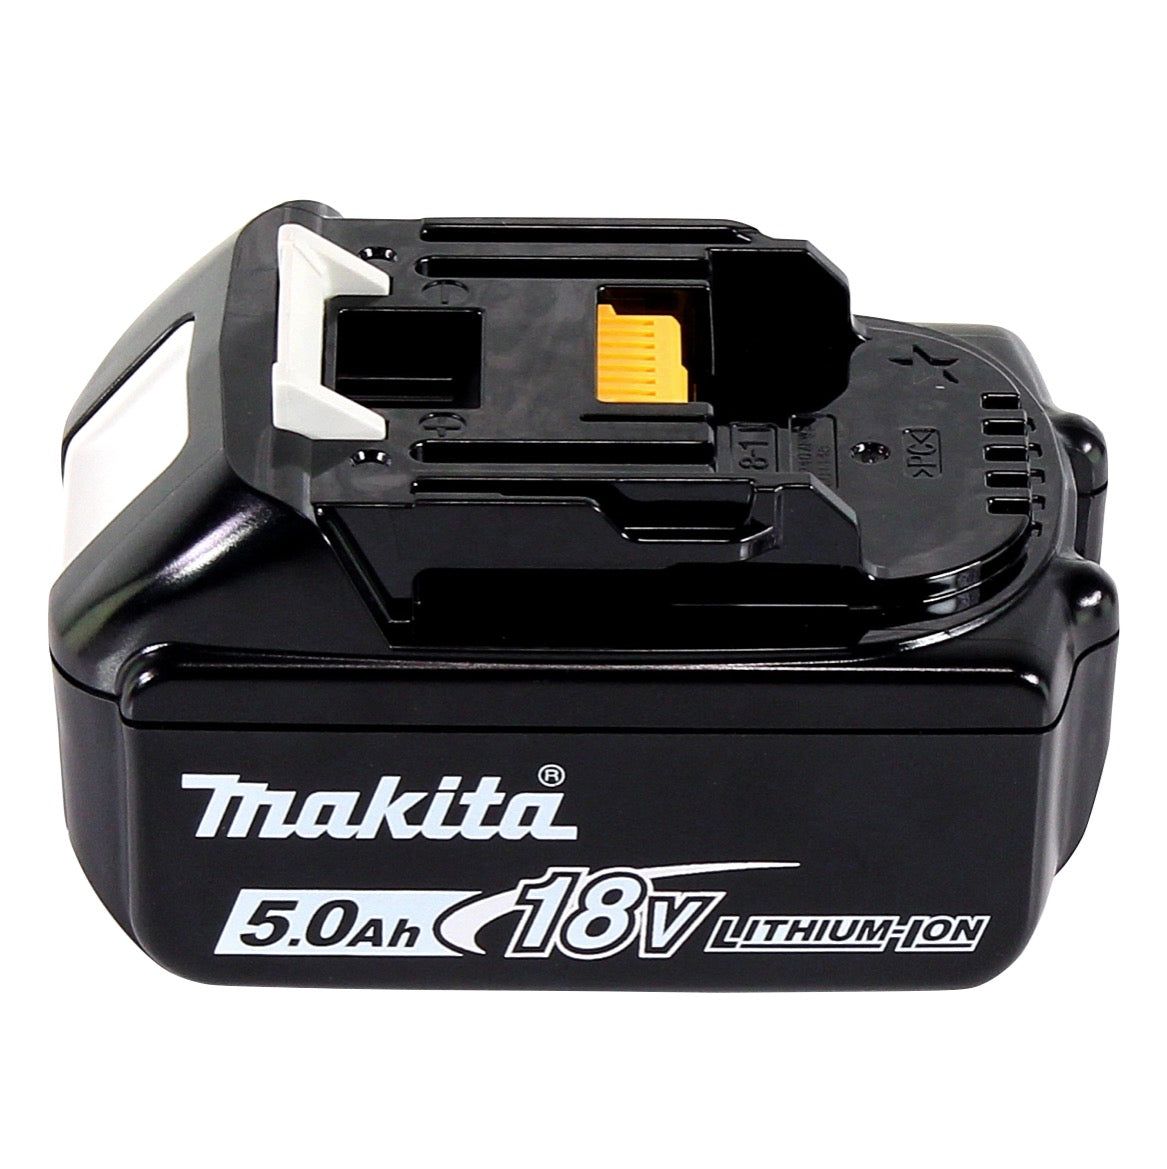 Makita DUH 602 T Akku Heckenschere 18 V 60 cm Brushless + 1x Akku 5,0 Ah - ohne Ladegerät - Toolbrothers